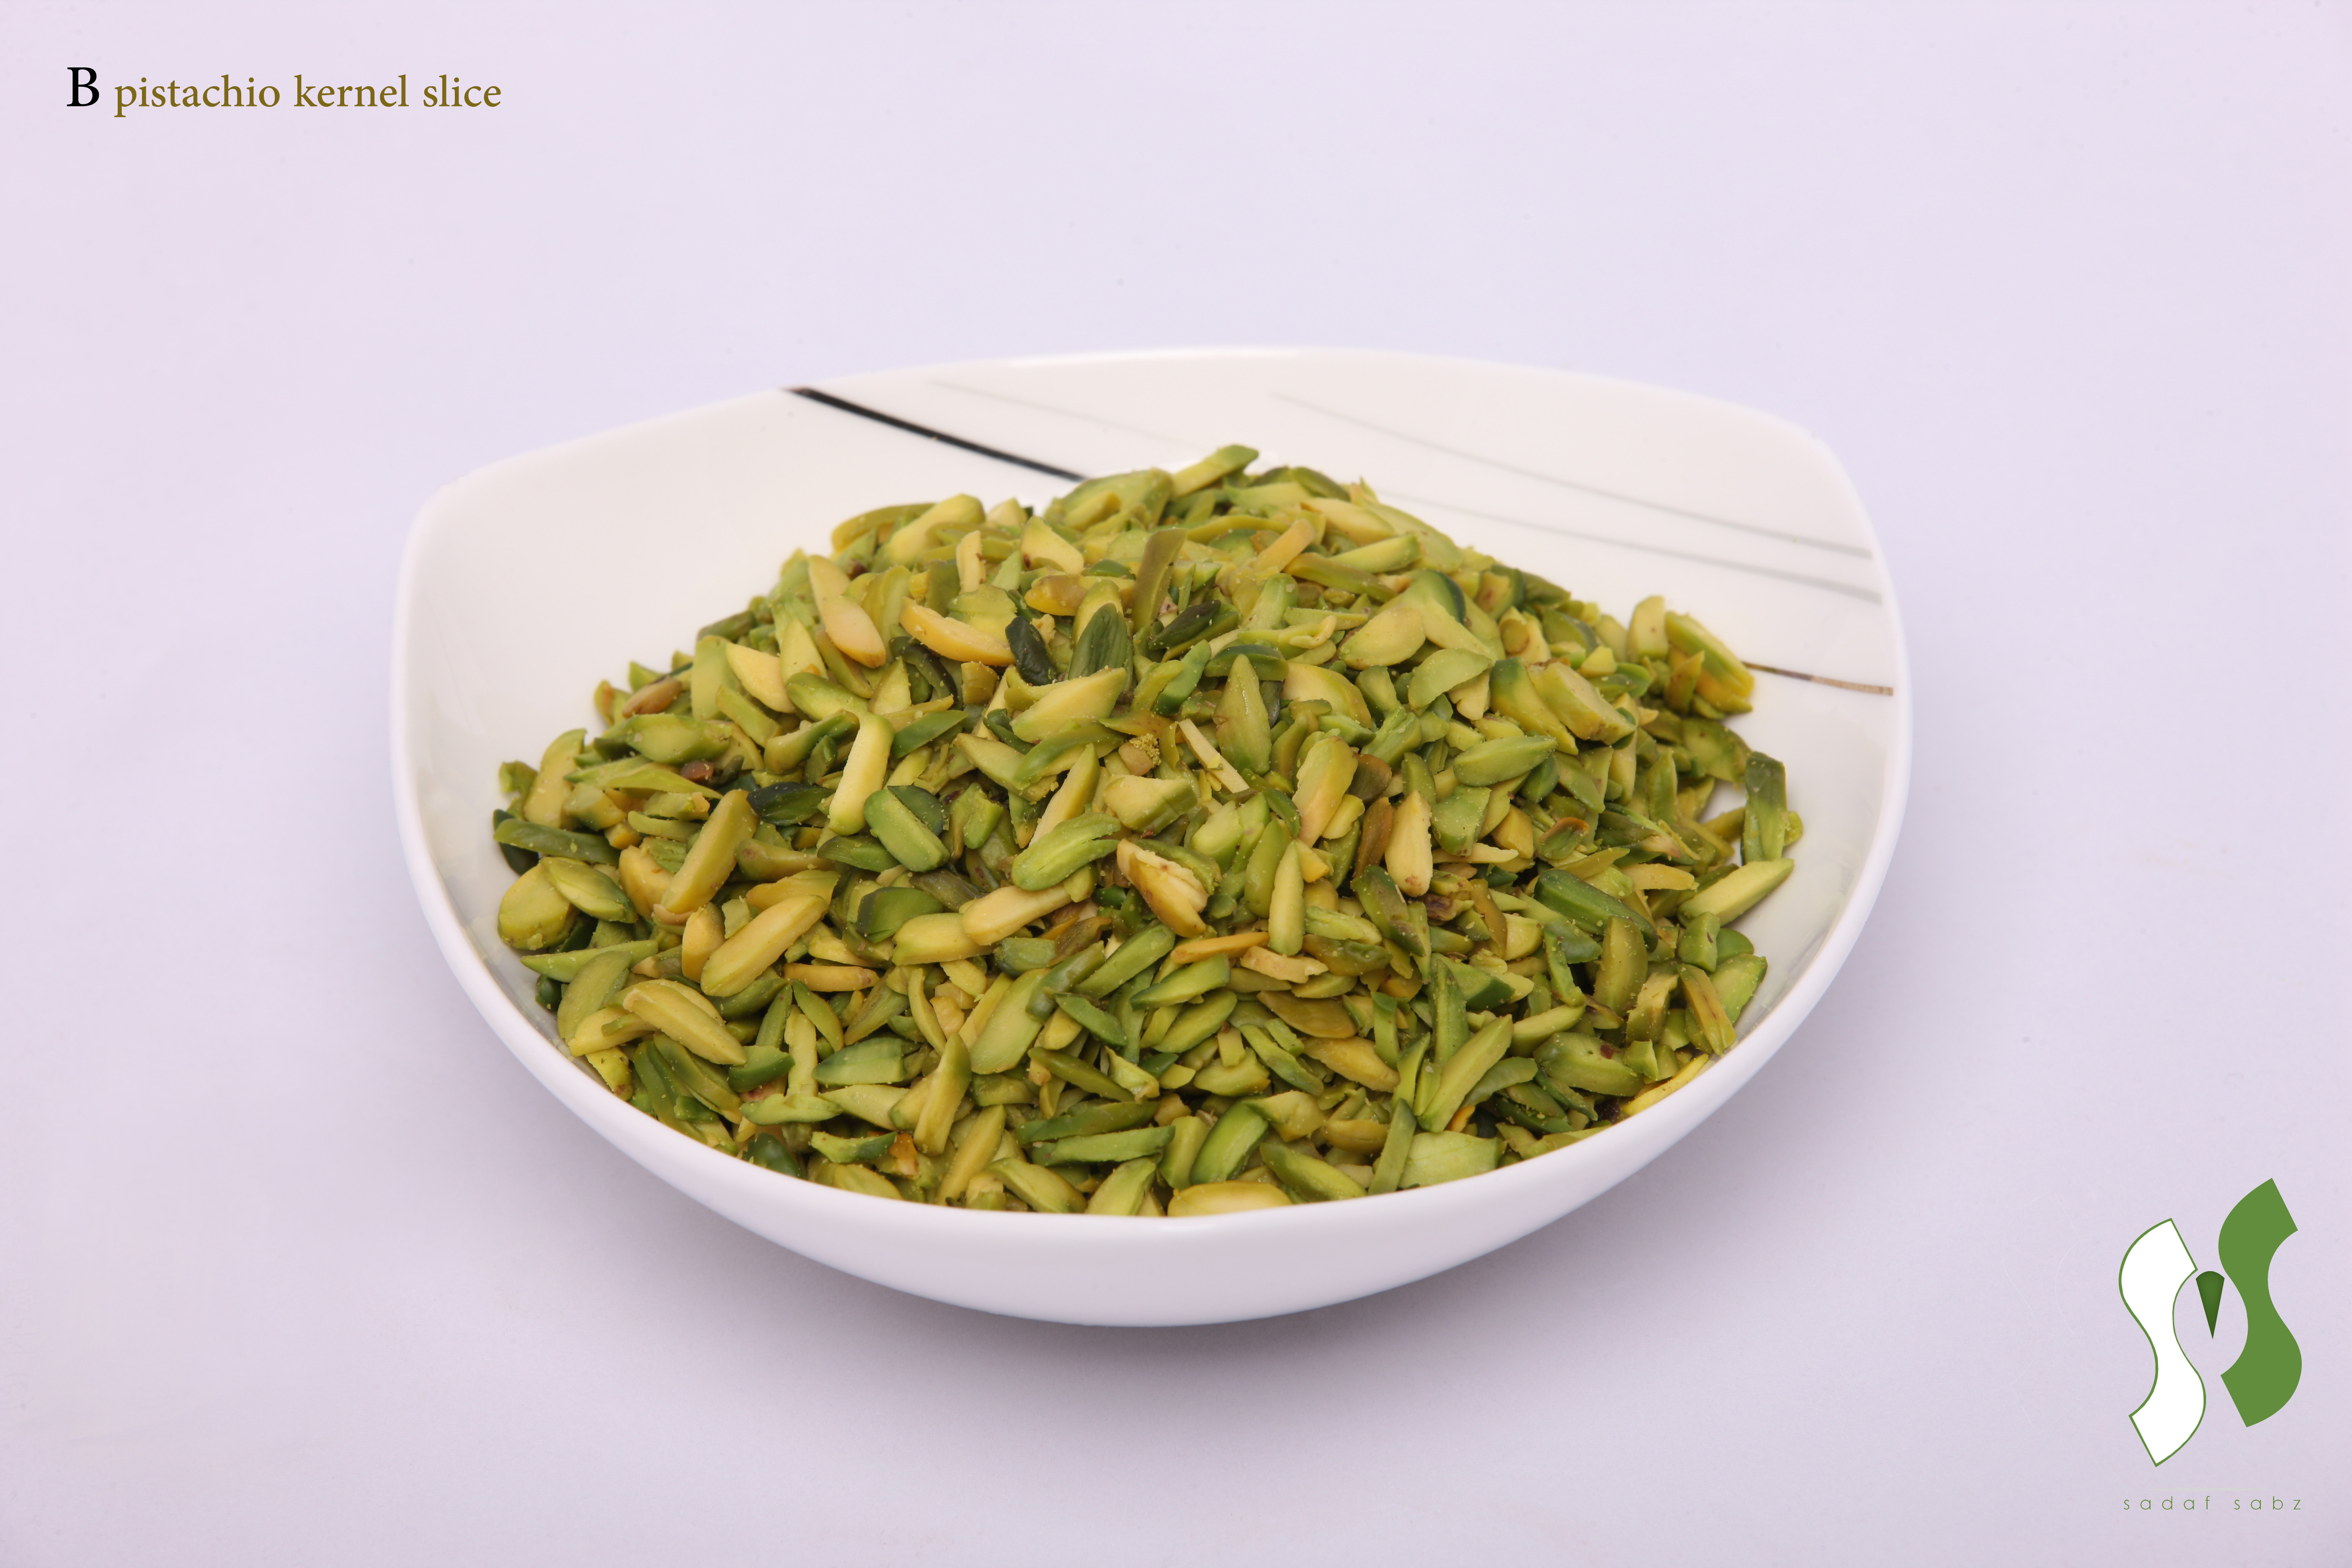 slivered-pistachio-kernel-grade-C